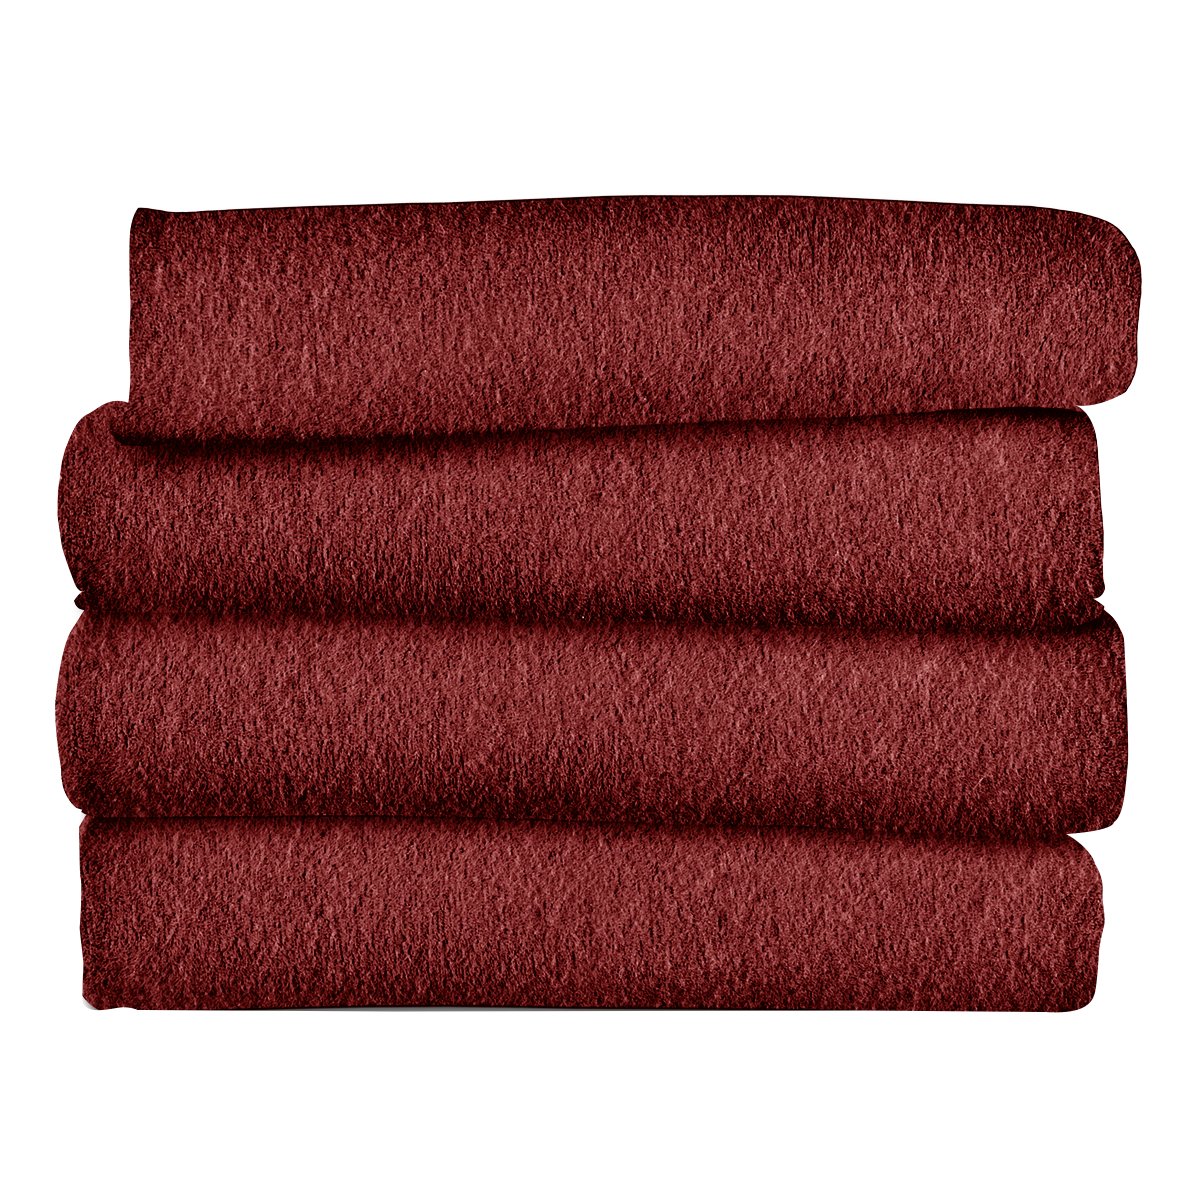 Sunbeam Electric Blanket Throw Fleece (50" x 60"), Red - image 1 of 6